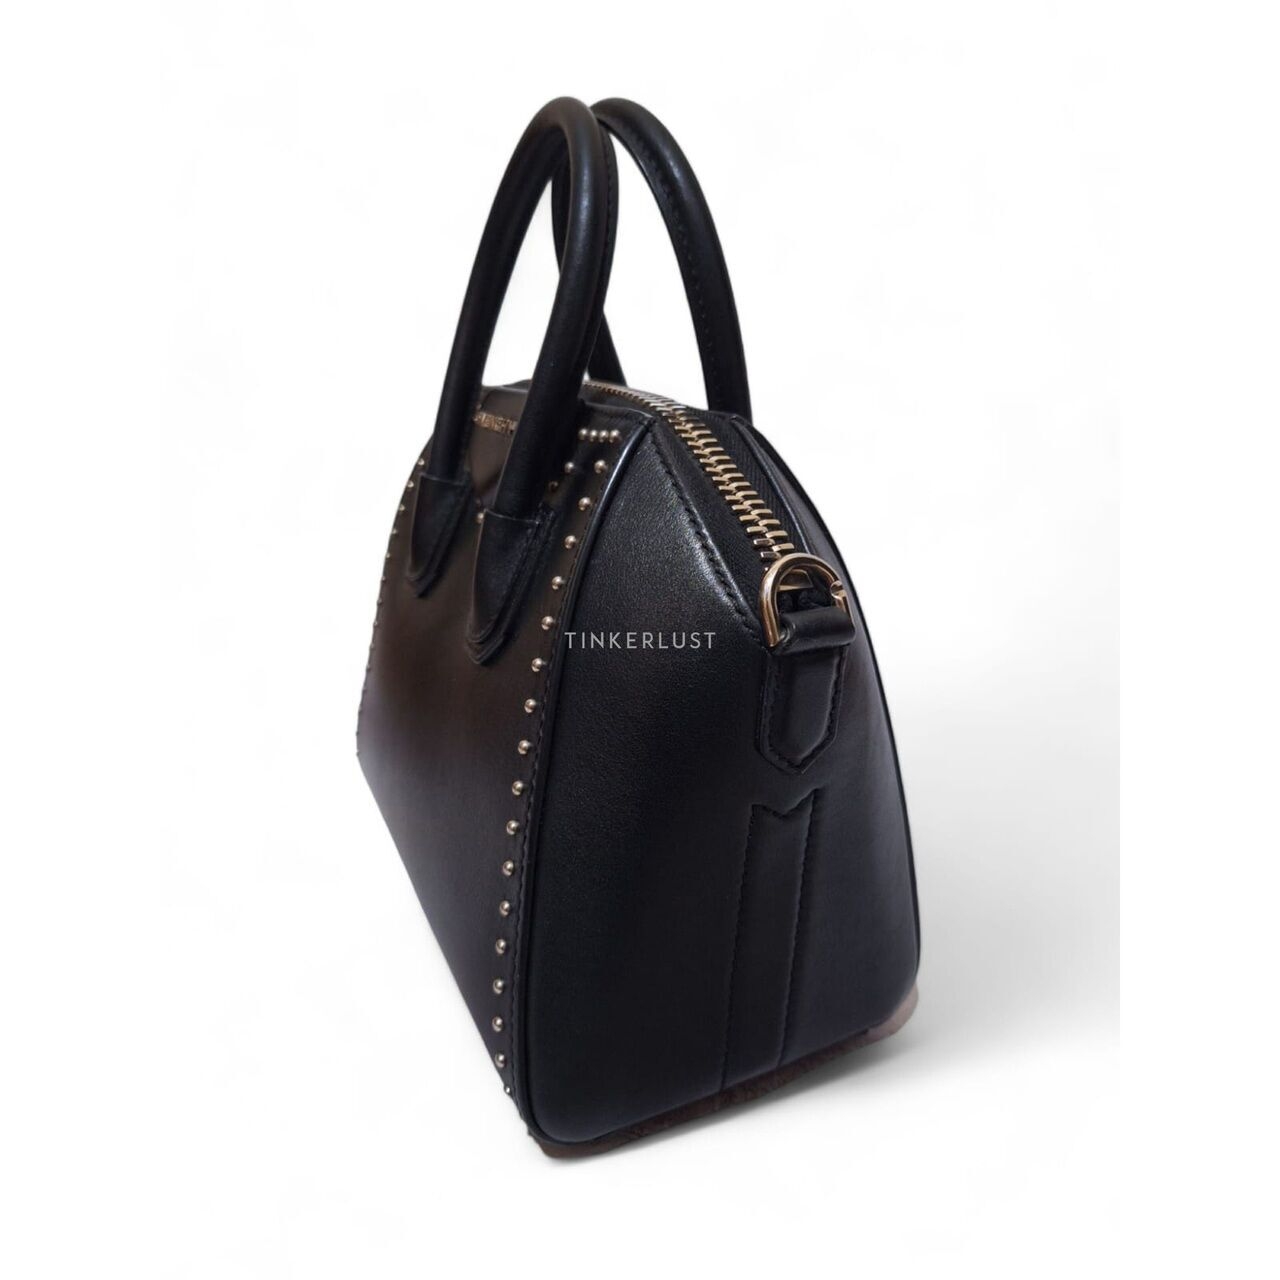 Givenchy Antigona Black Leather Satchel